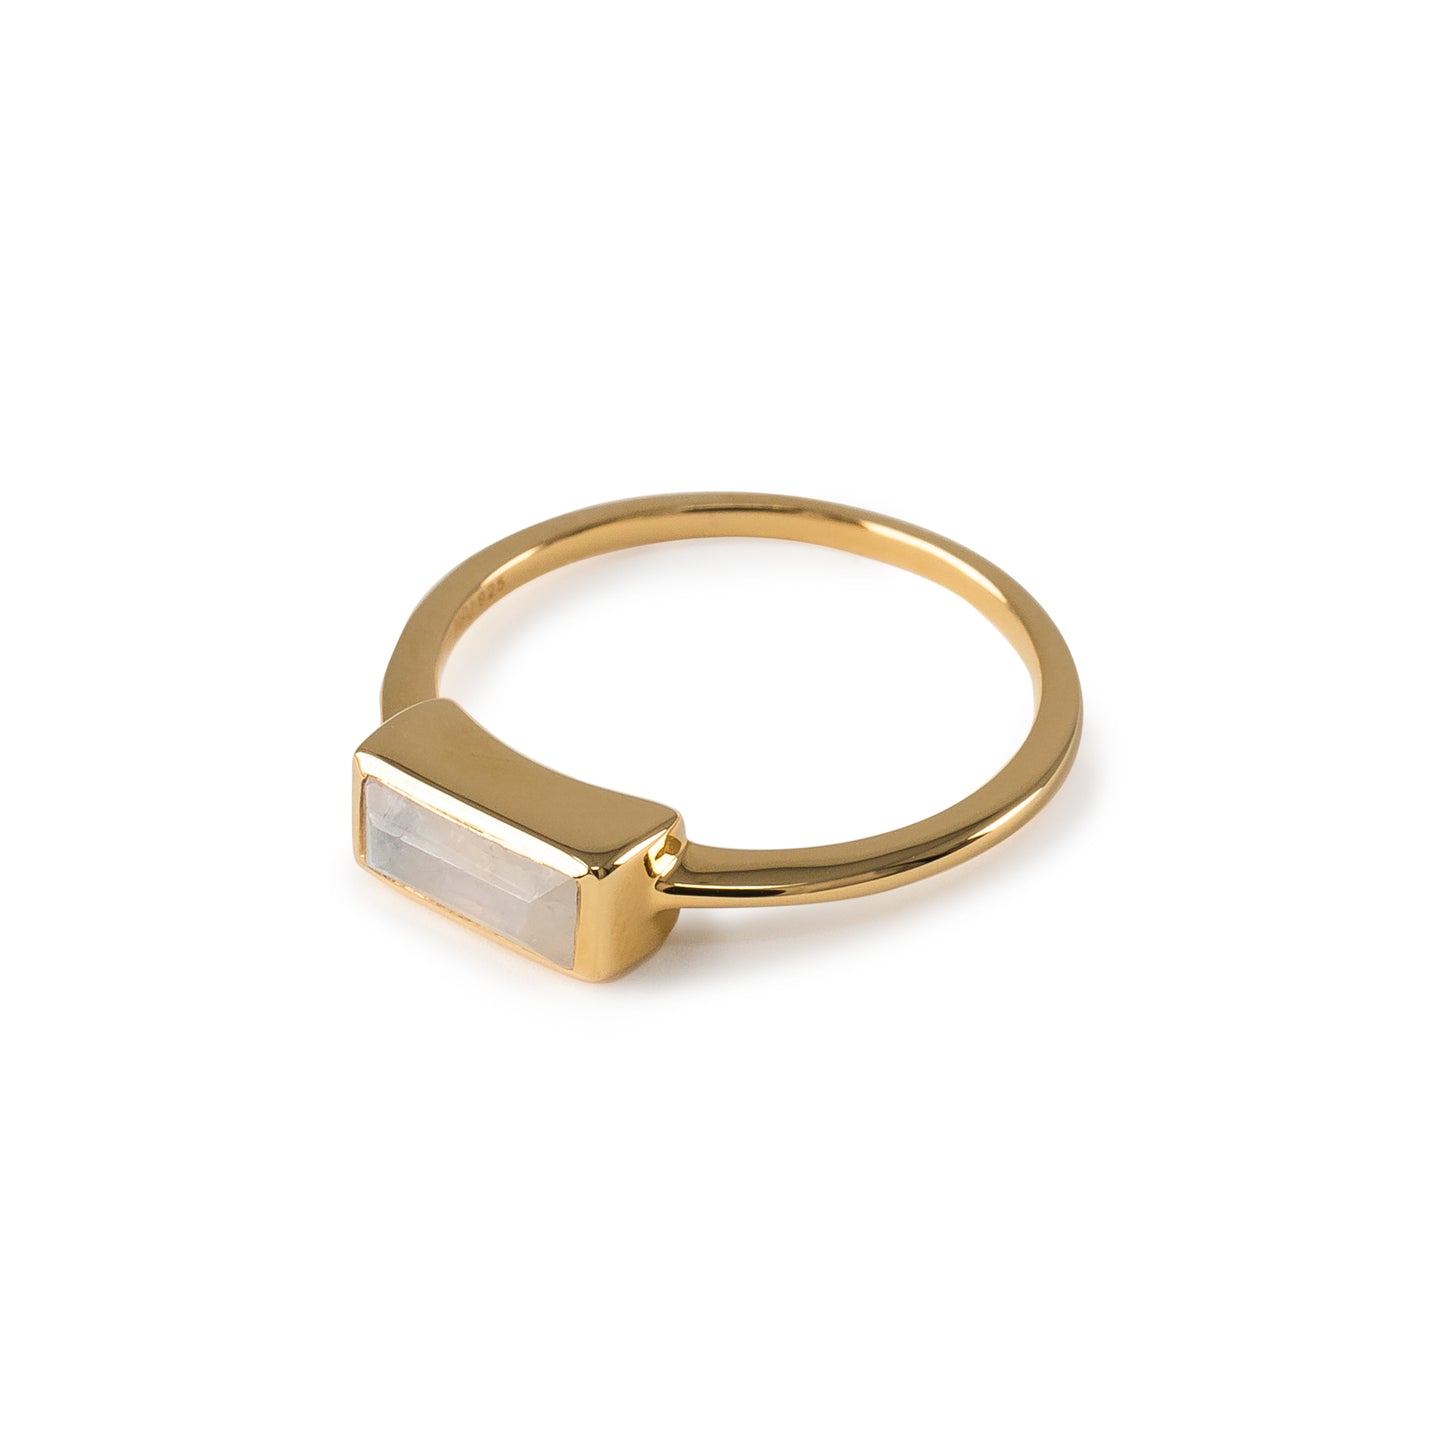 Moonstone Baguette Ring in 14K Gold Vermeil